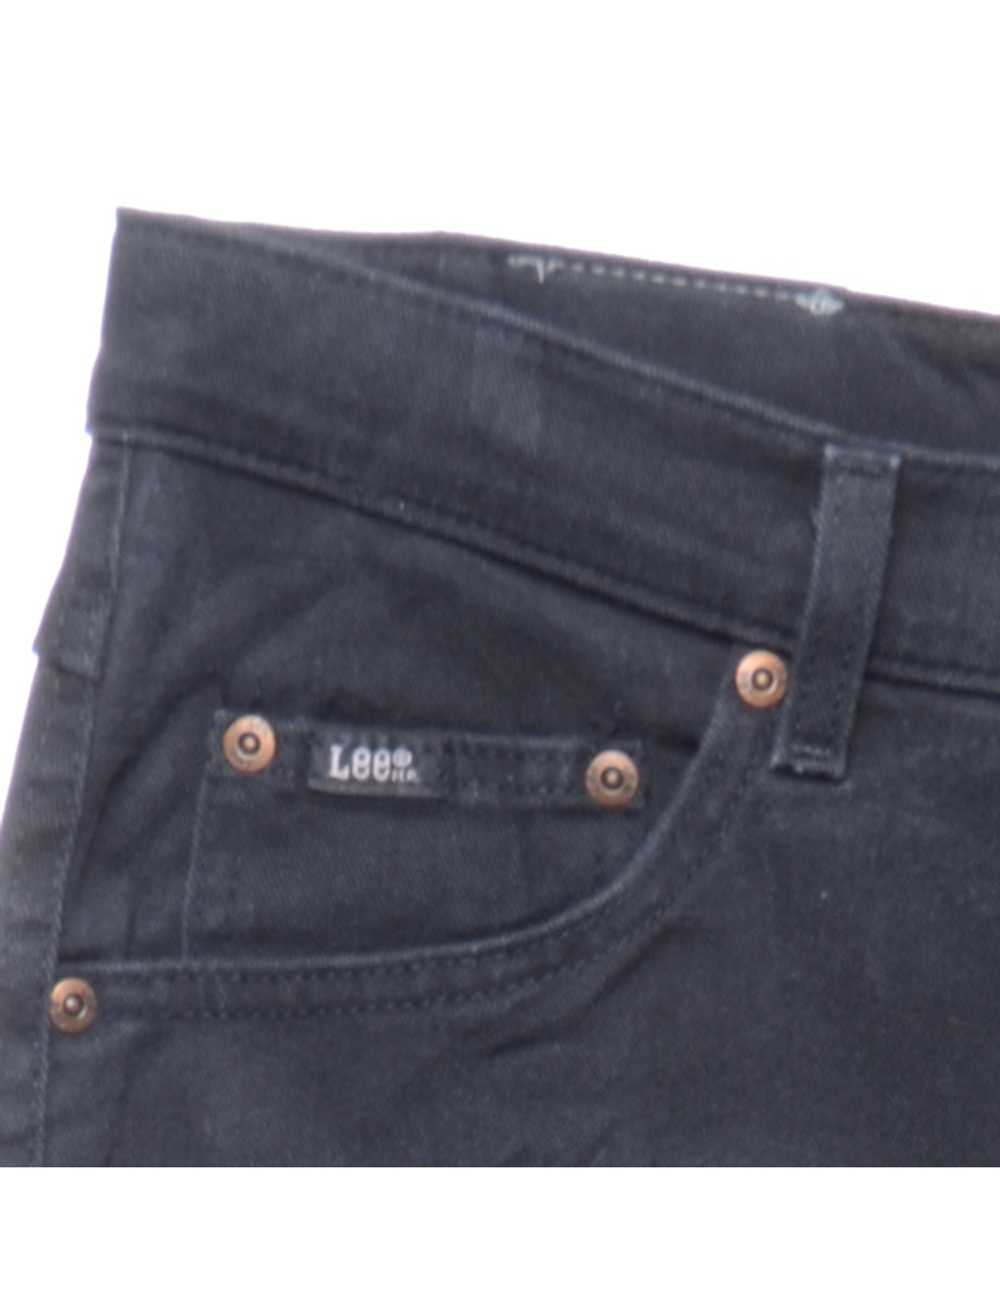 Black Lee Jeans - W32 L32 - image 3